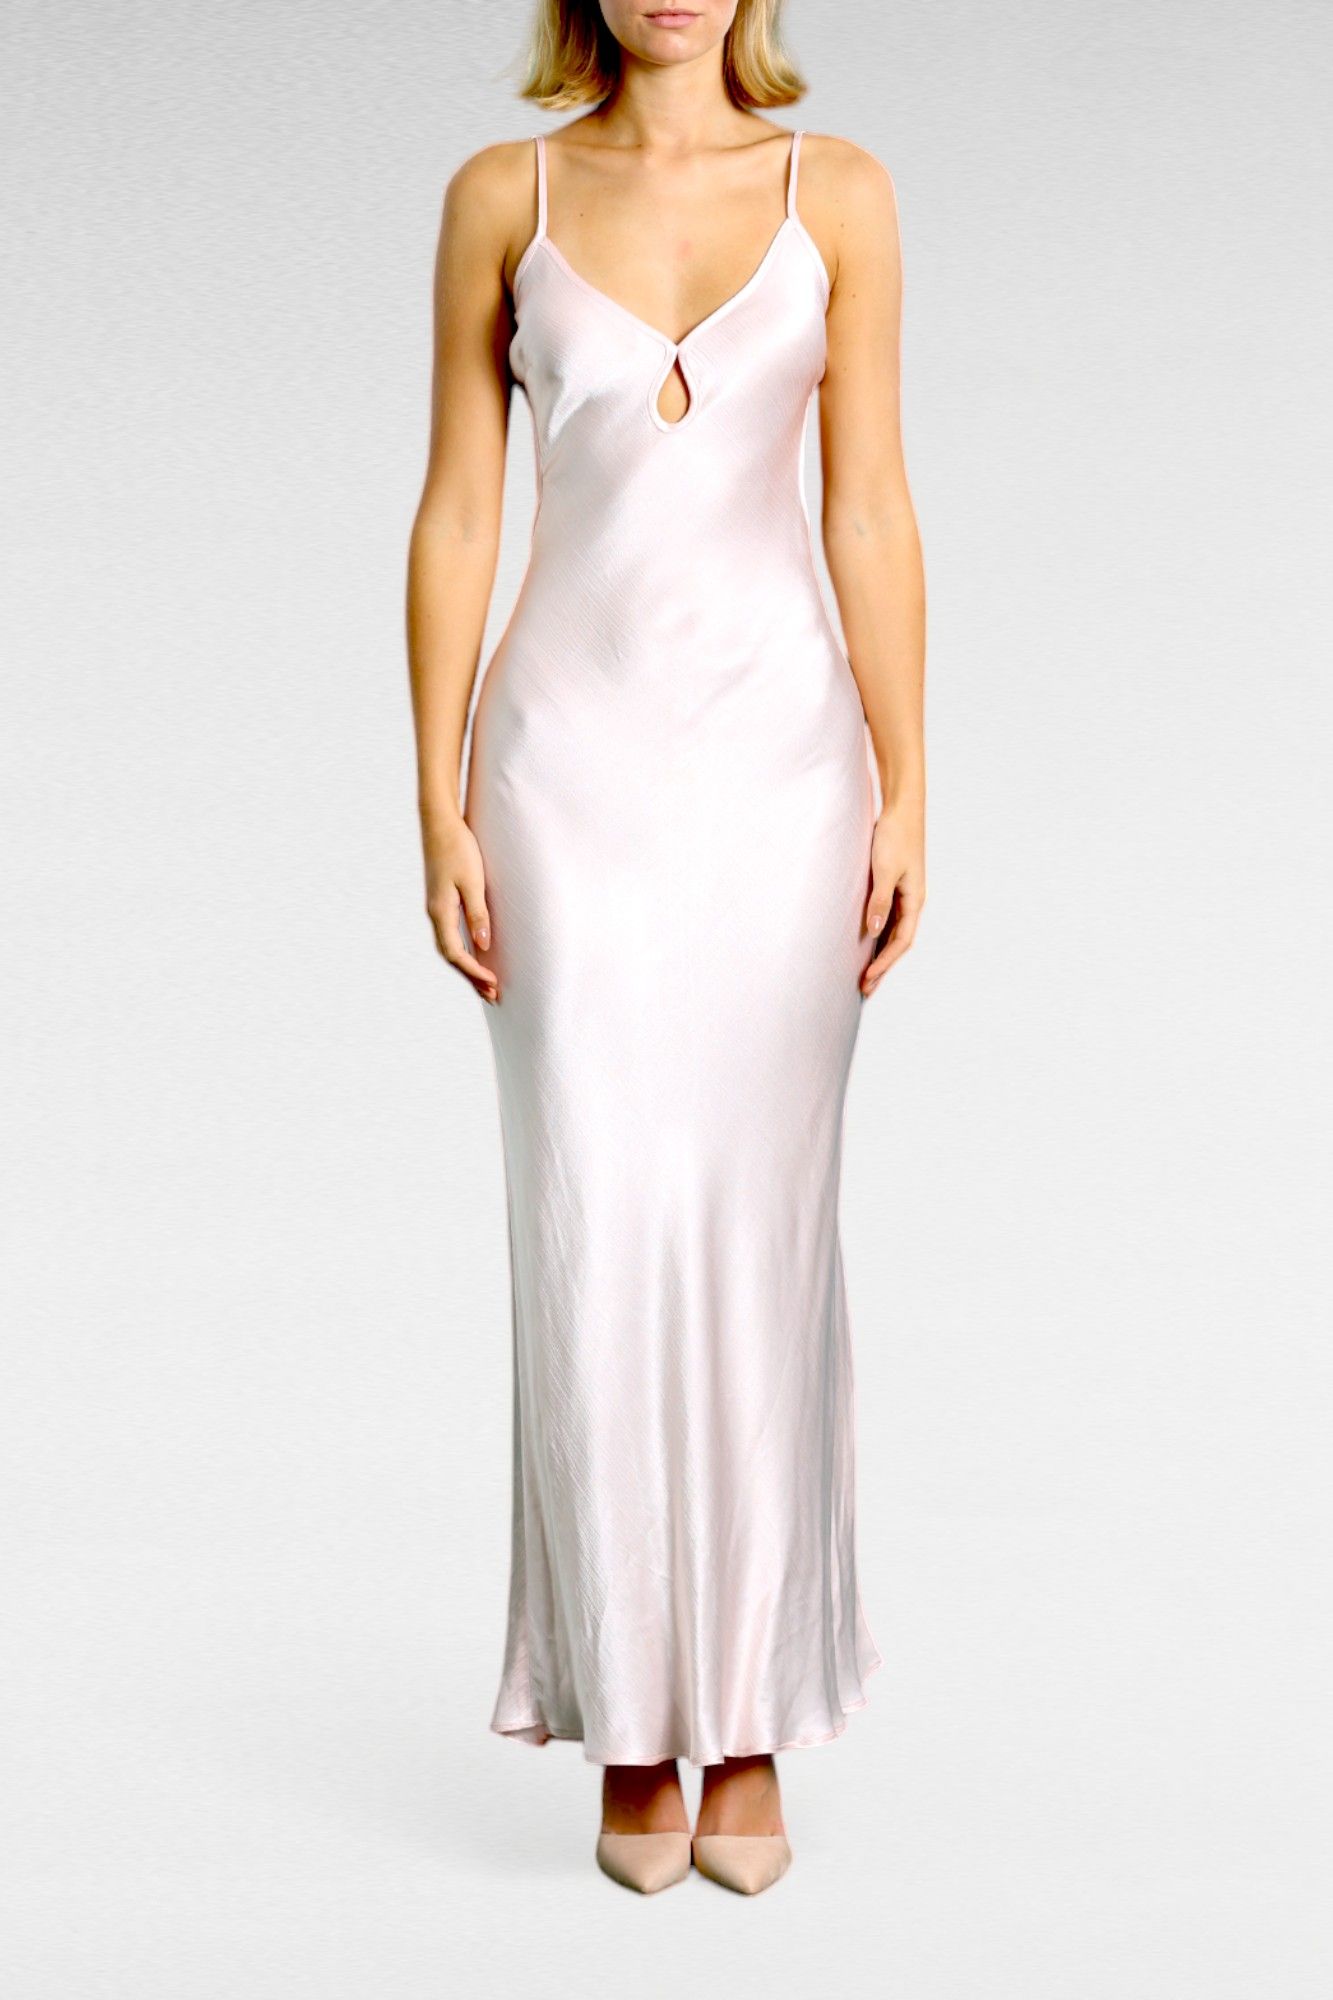 Kate V Pink blush backless bridesmaid dress Cocktail Party dress